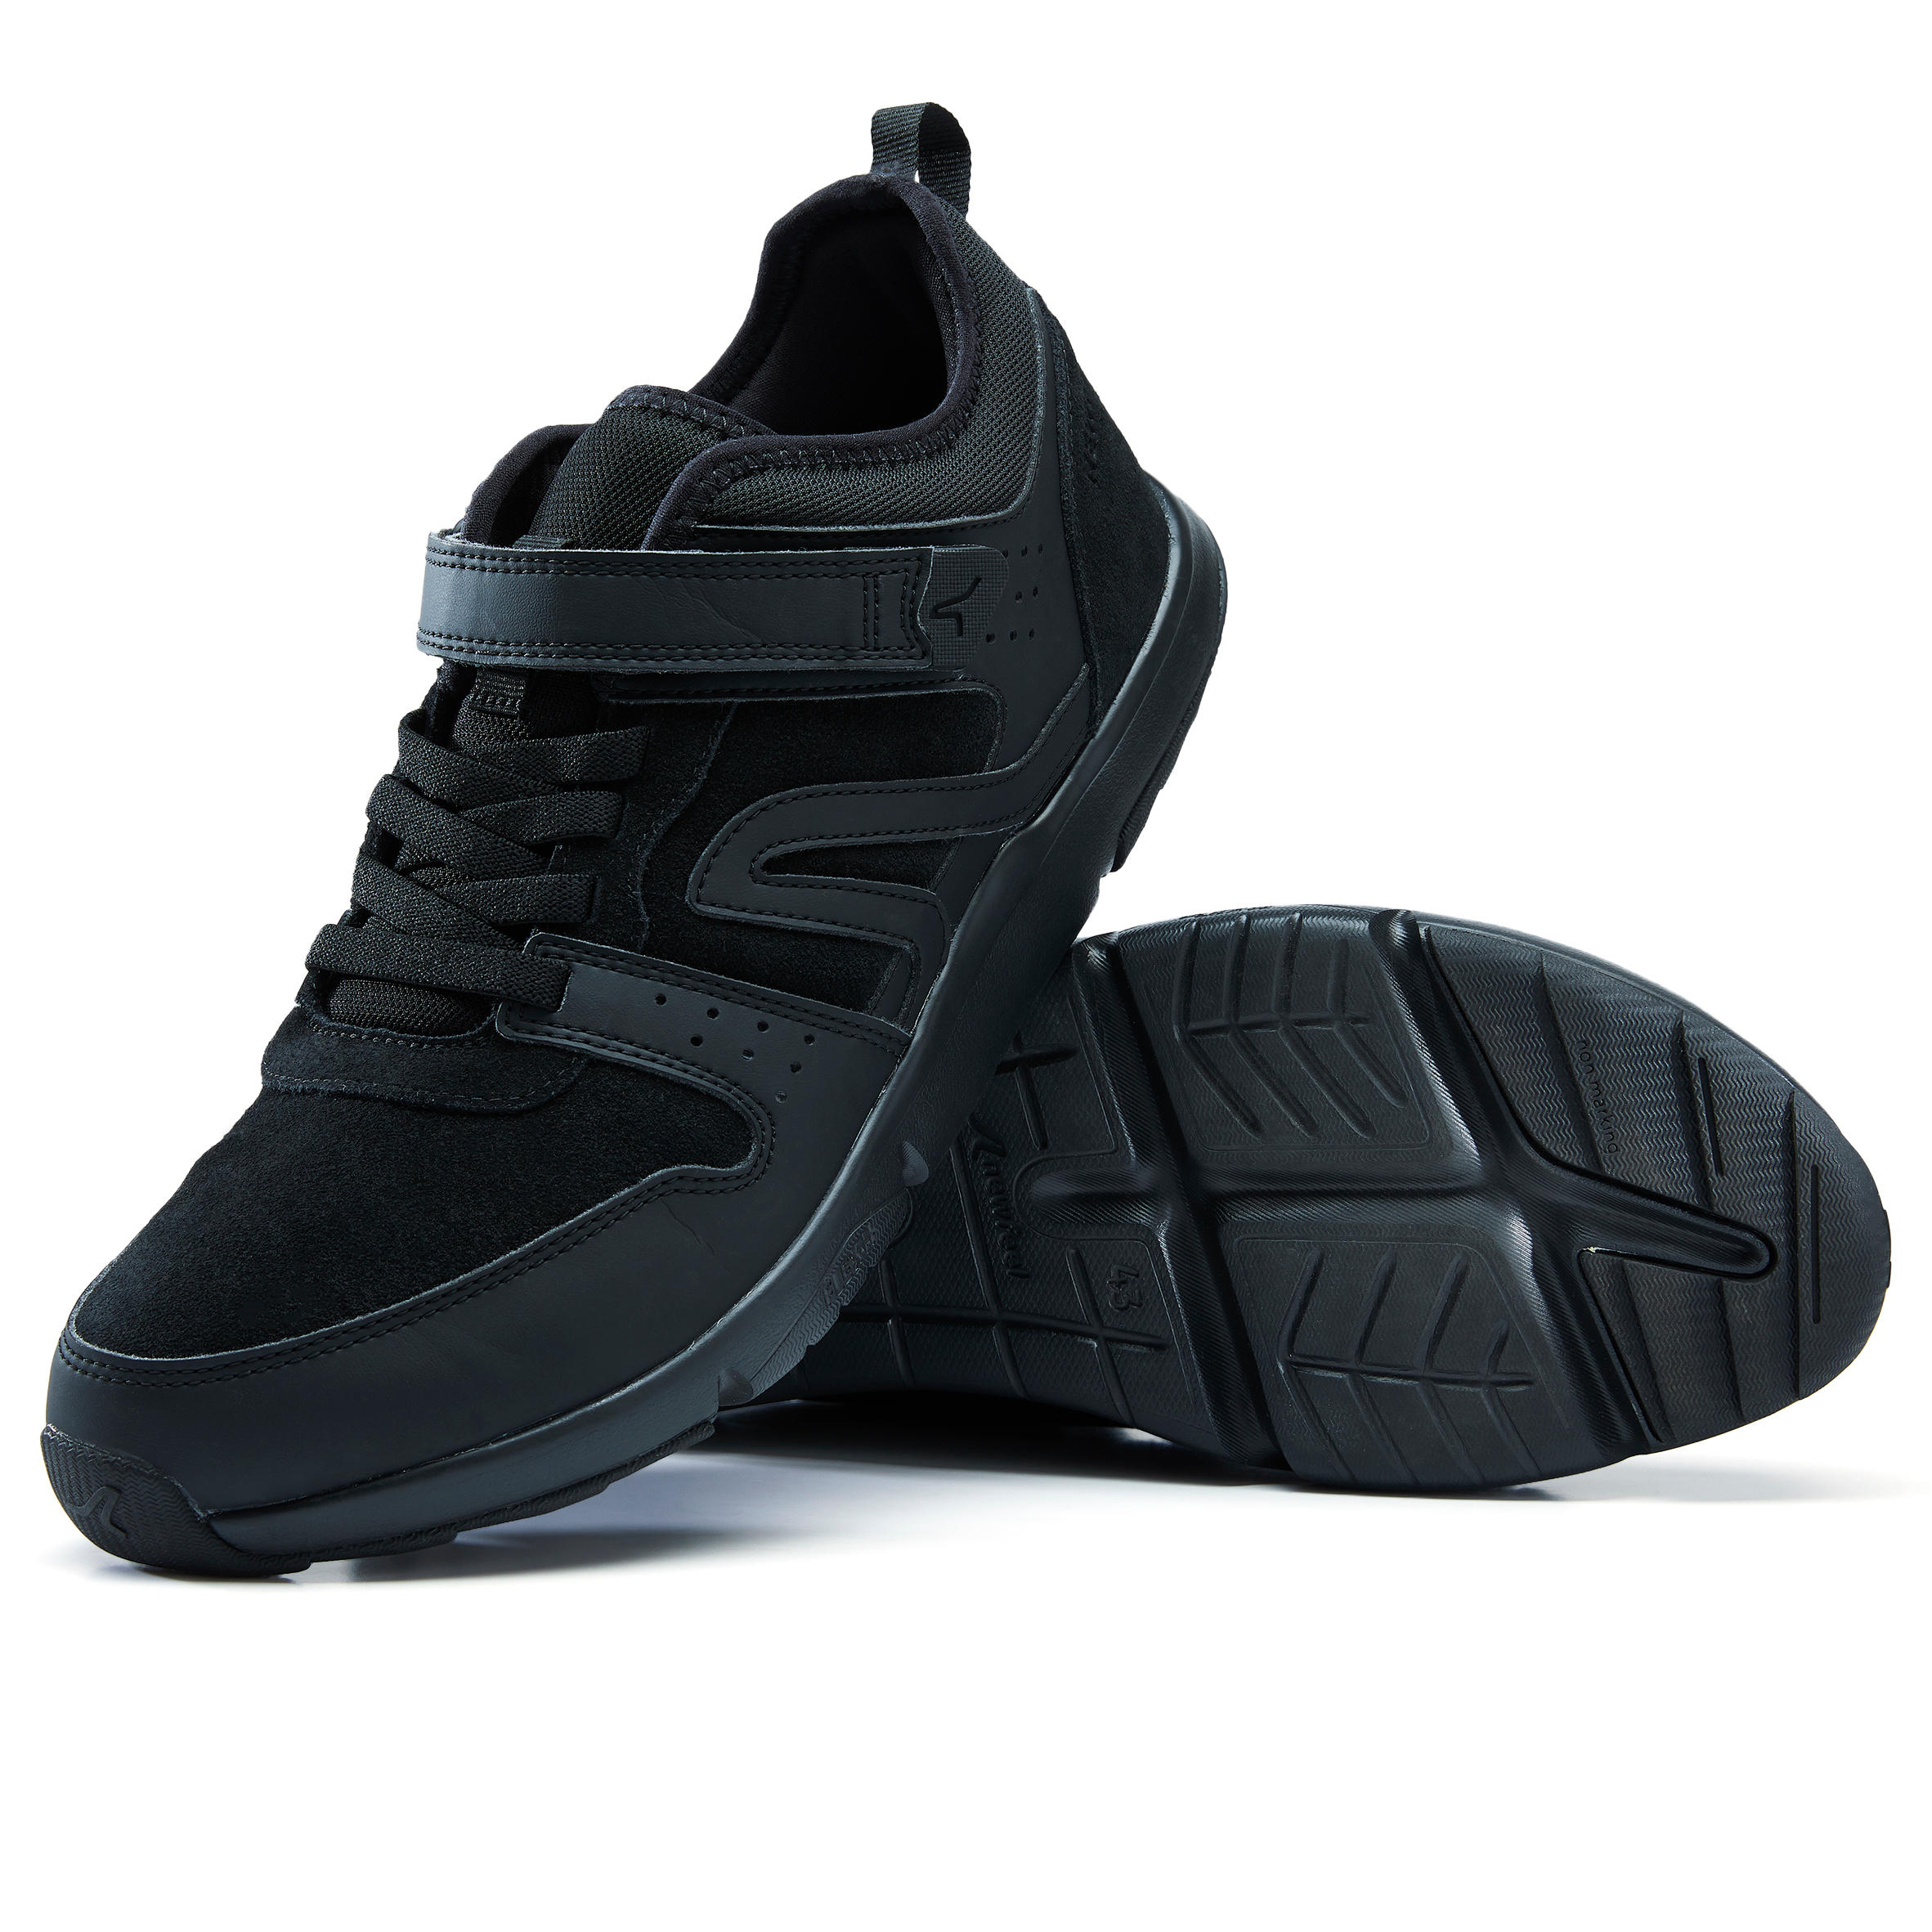 Actiwalk Easy Leather Men's Urban Walking Shoes - Black 4/14